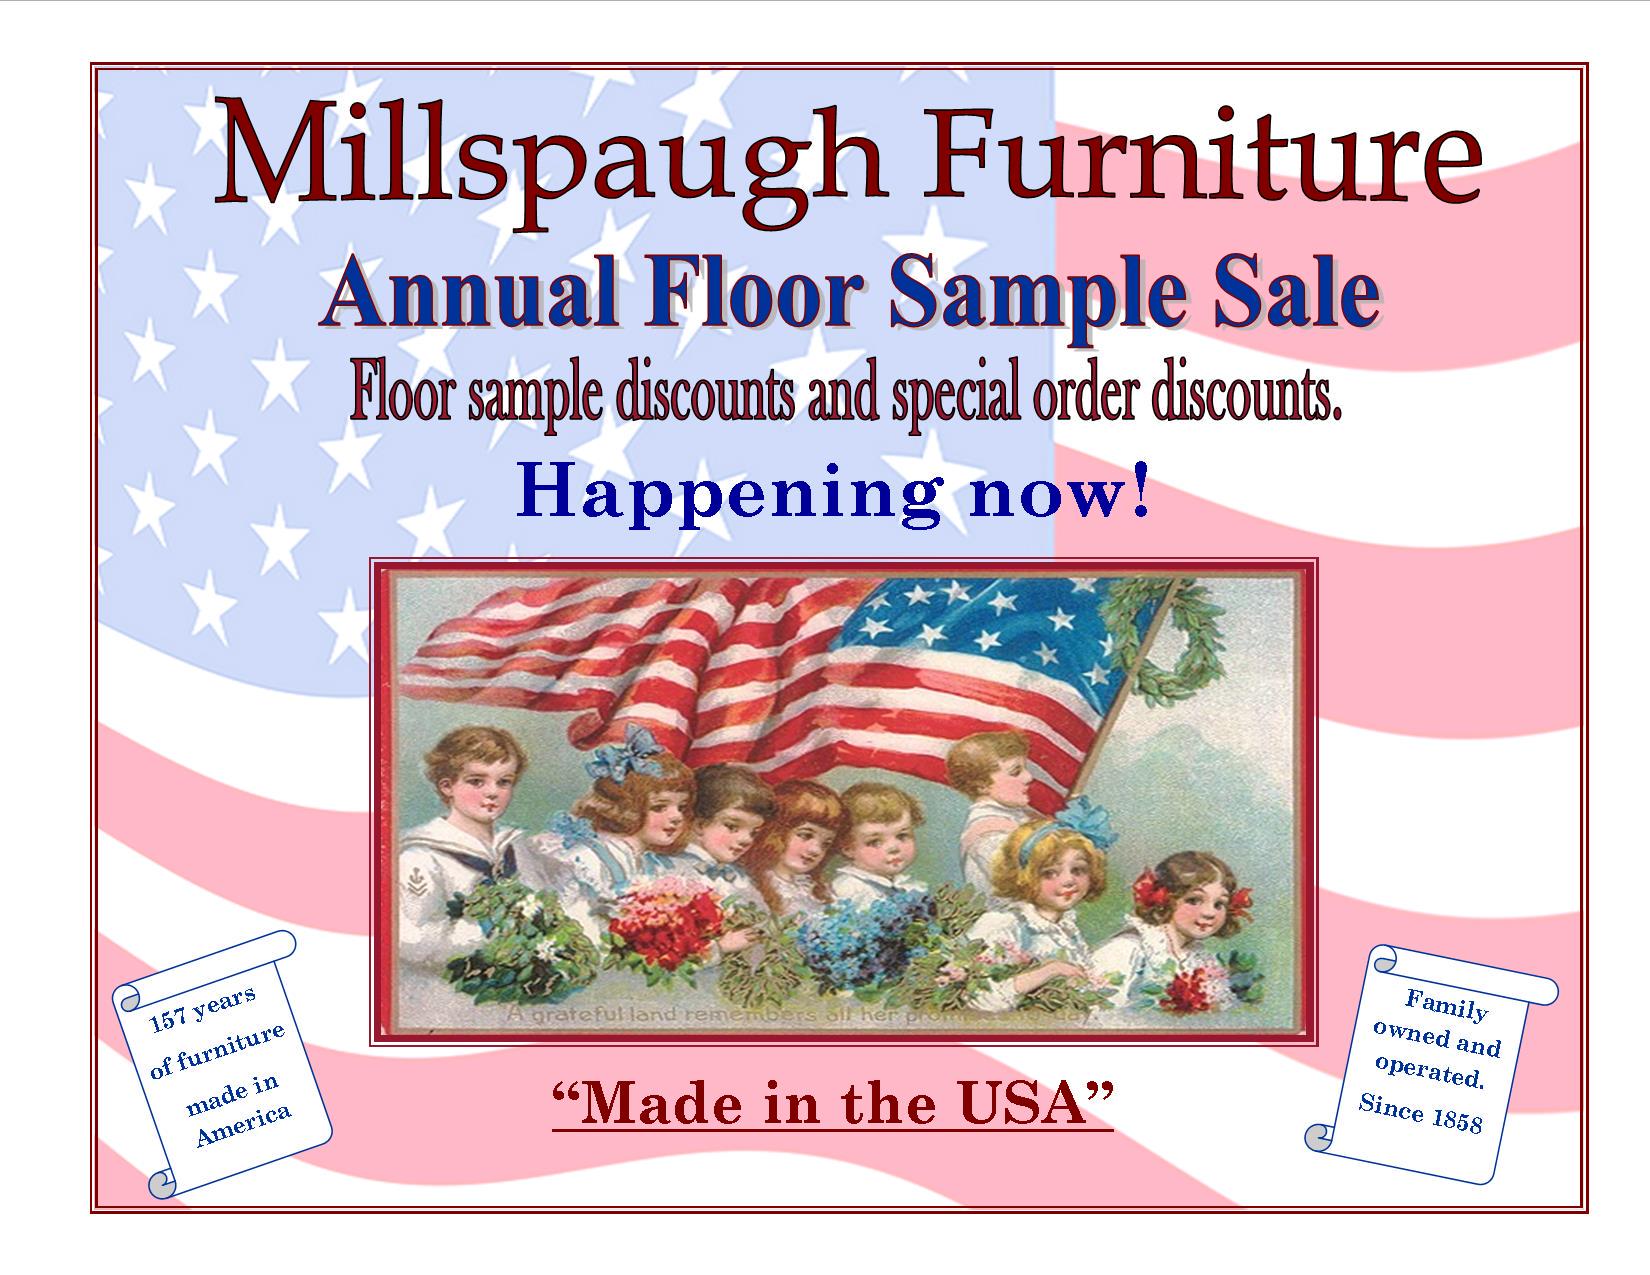 Hudson Valley Furniture Stores - Millspaugh Furniture